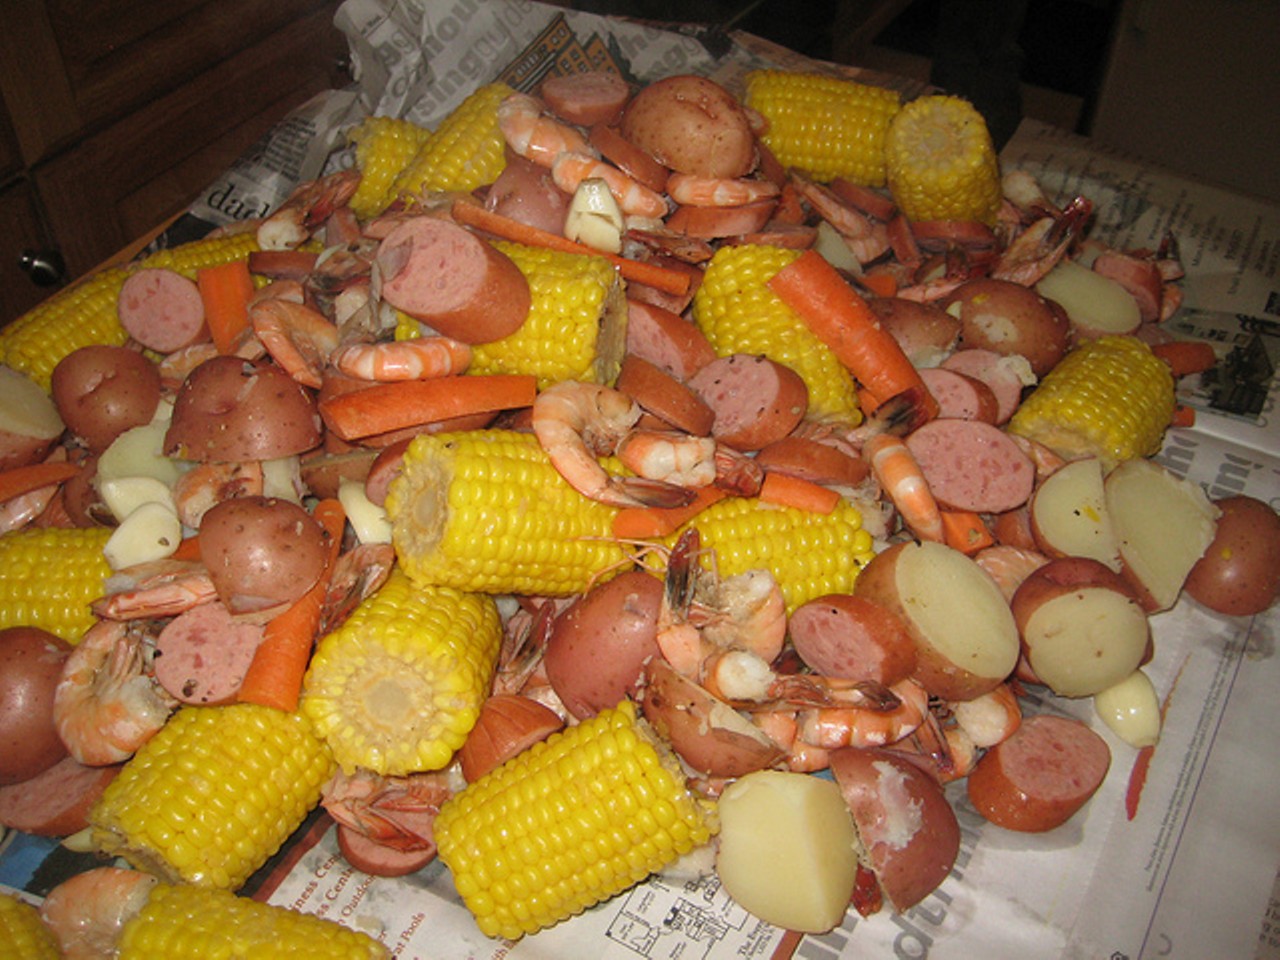 Labor Day Seafood Boil at the Sirata
5300 Gulf Blvd., St. Pete Beach
Photo via Selena N. B. H., Flickr/CC2.0